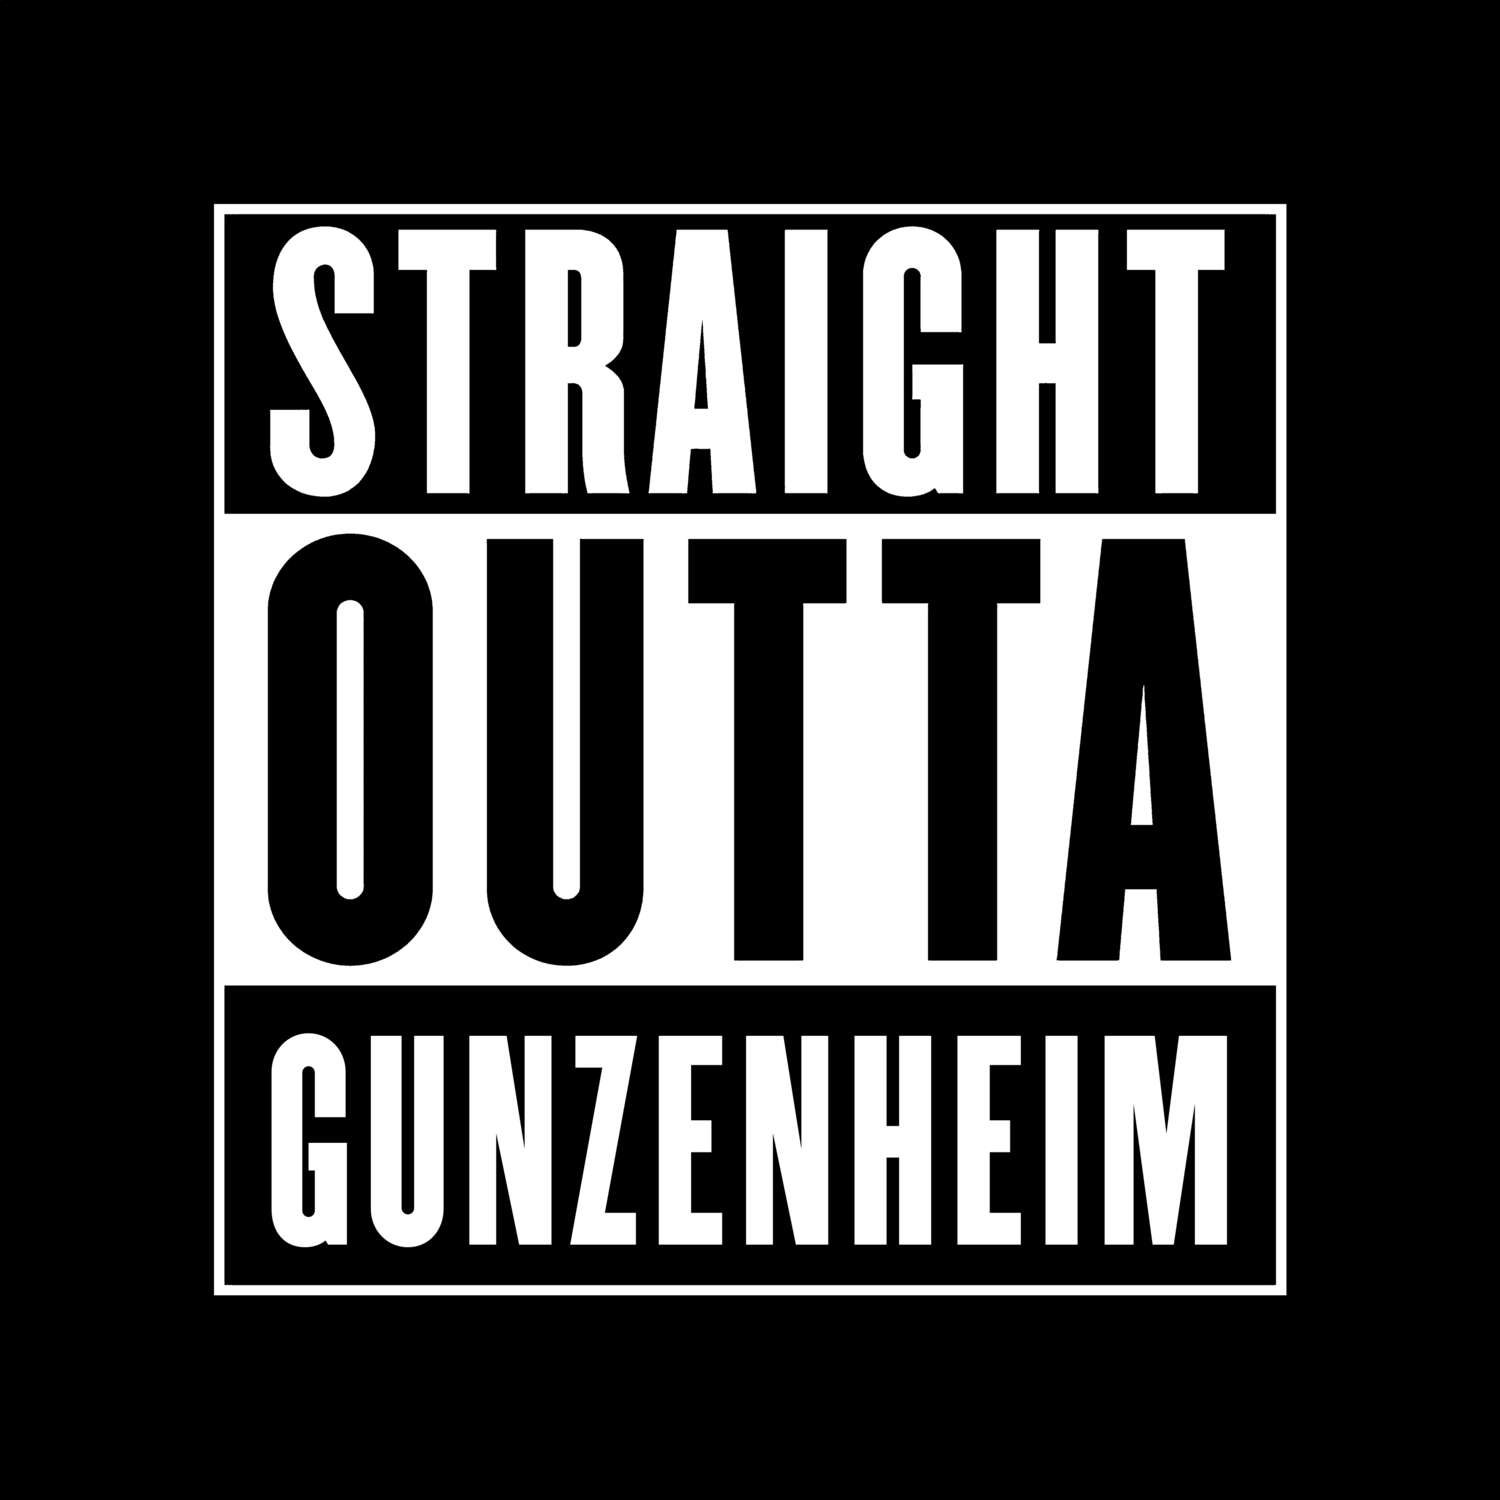 Gunzenheim T-Shirt »Straight Outta«